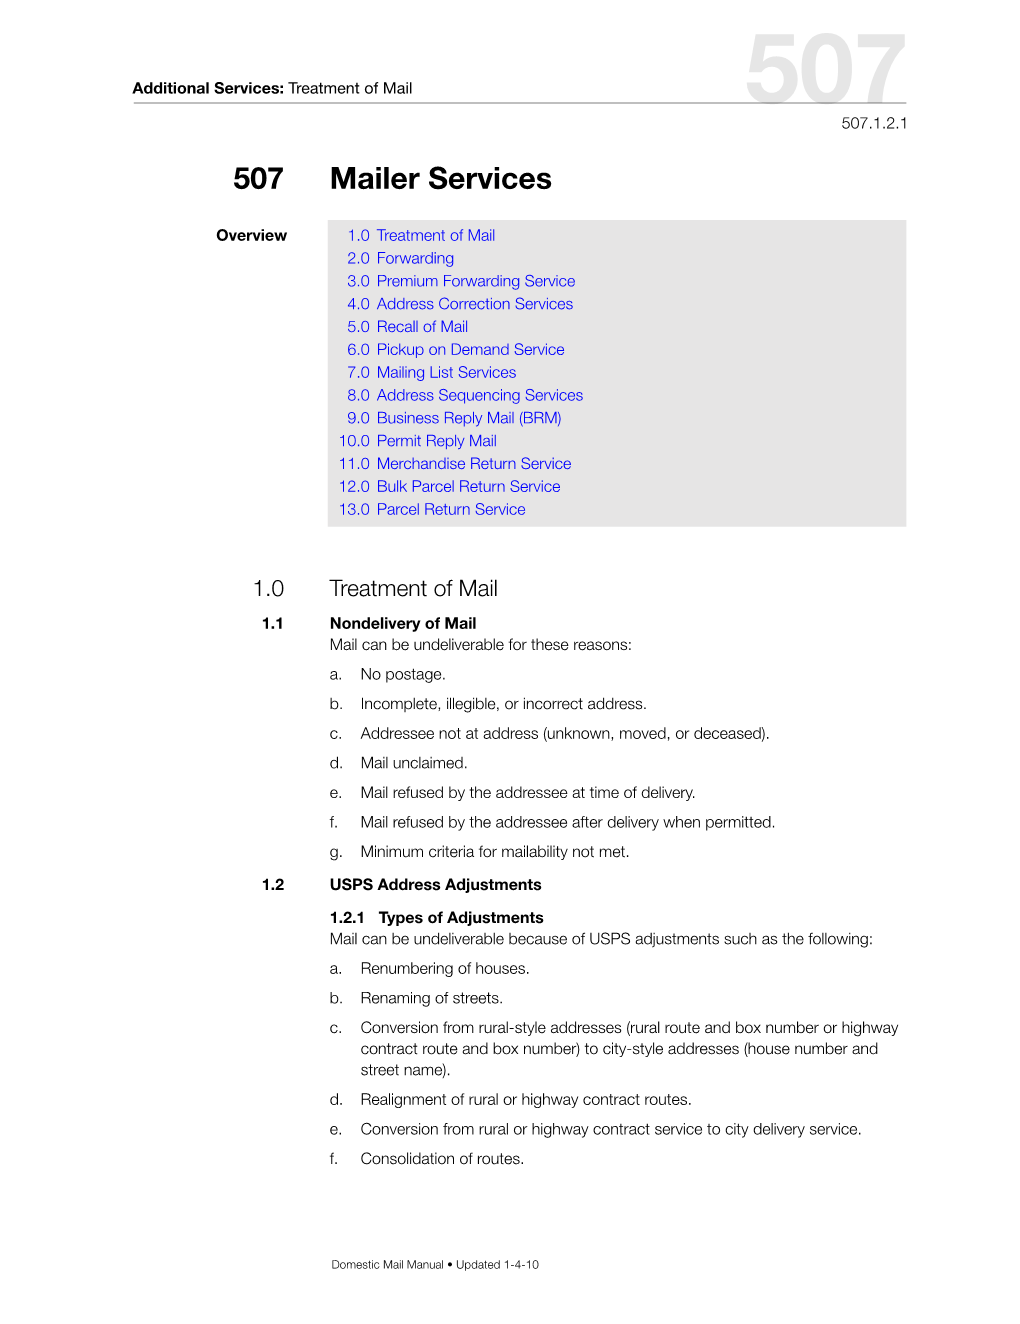 DMM 507 Mailer Services